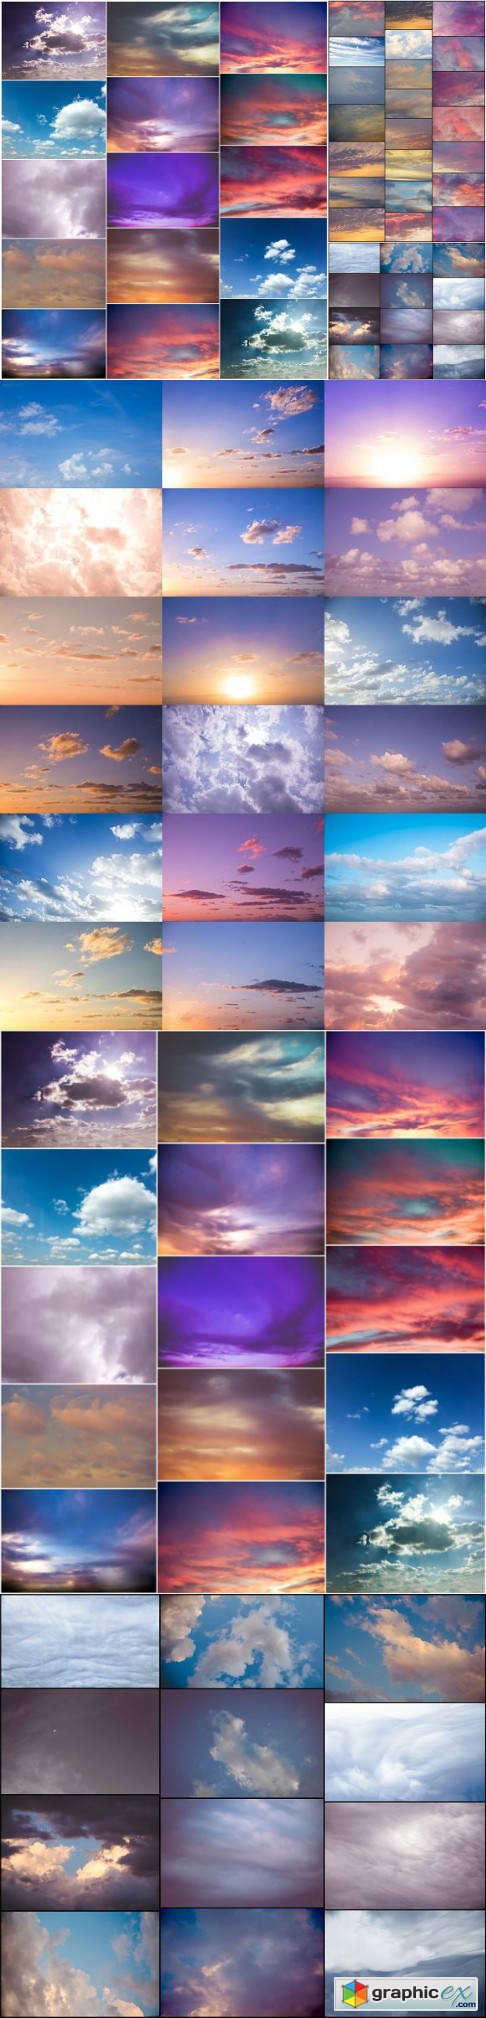 PhotoShop Sky & Cloud Overlays